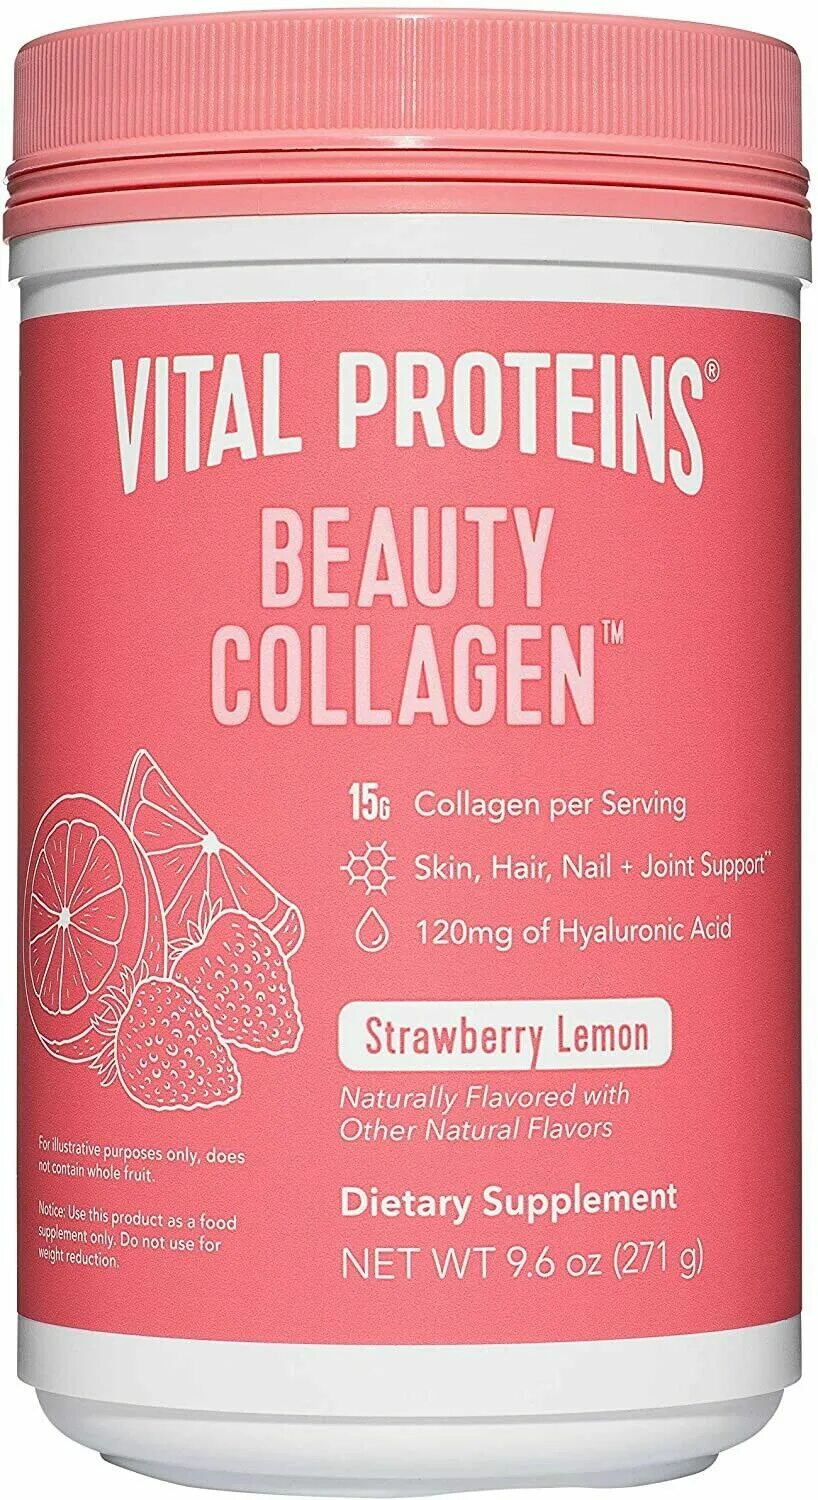 Vital proteins collagen купить. Коллаген. Коллаген Витал. Коллаген Beauty Collagen. Витал протеин коллаген.